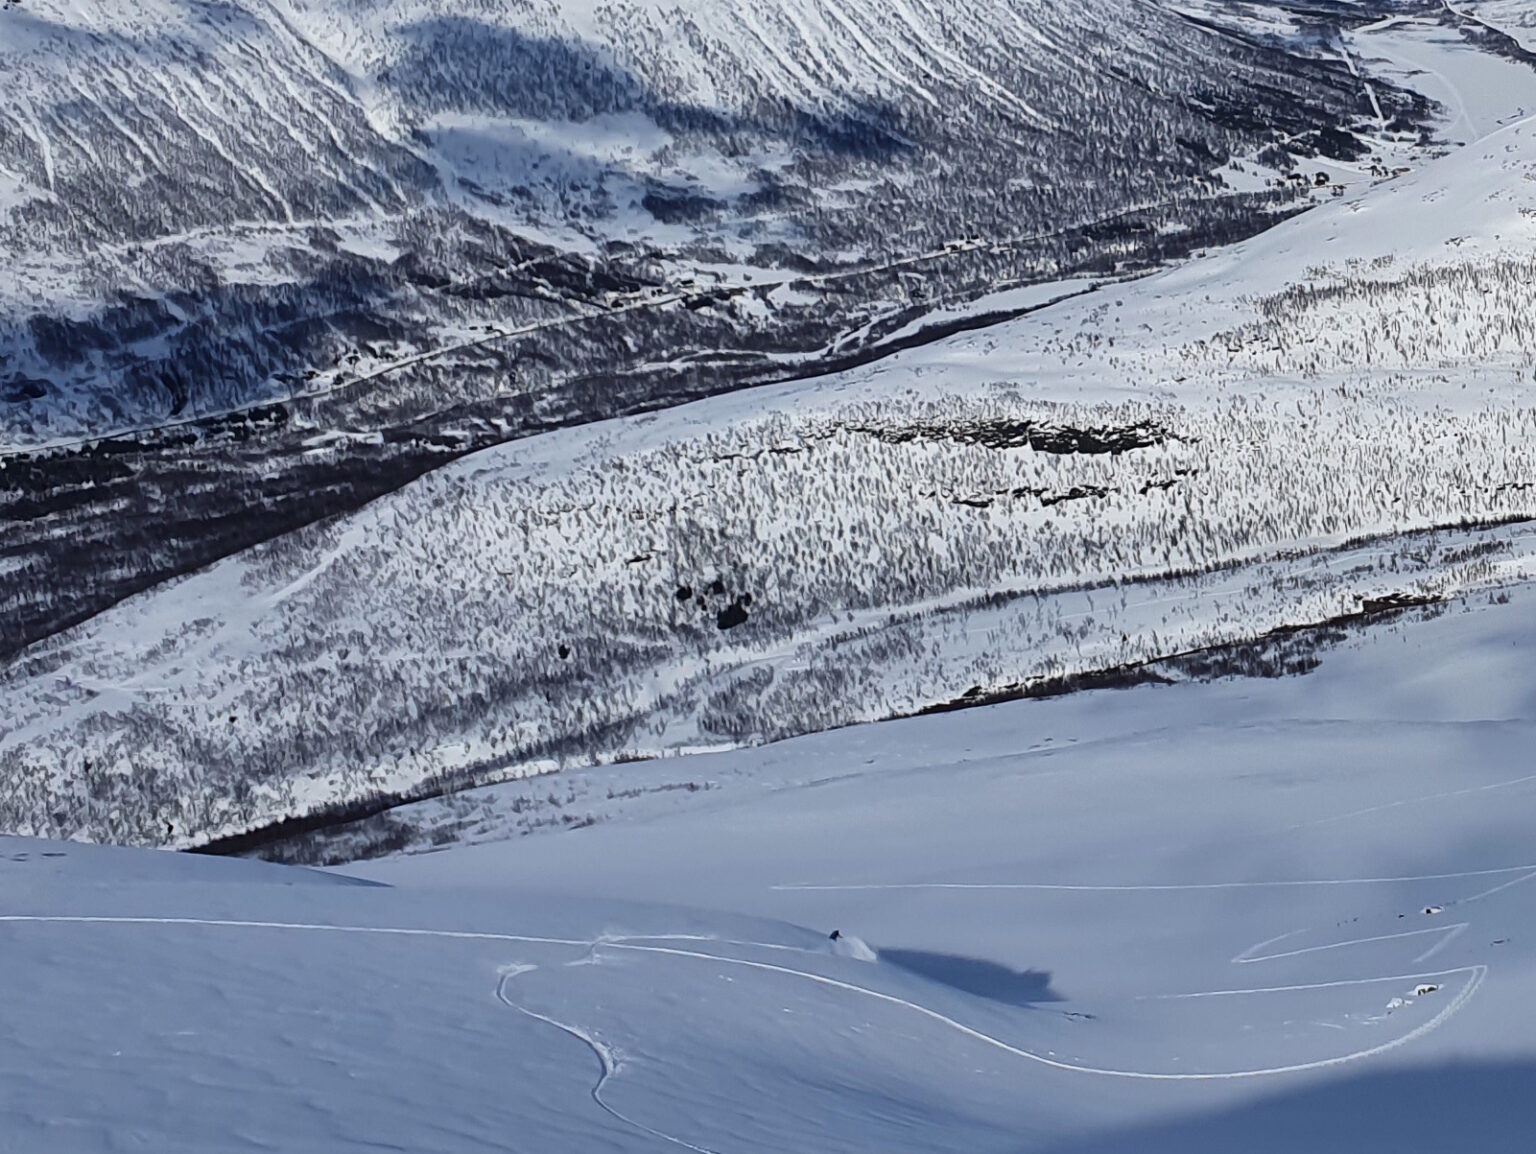 Amazing powder ski touring conditions off of Istinden Ridge